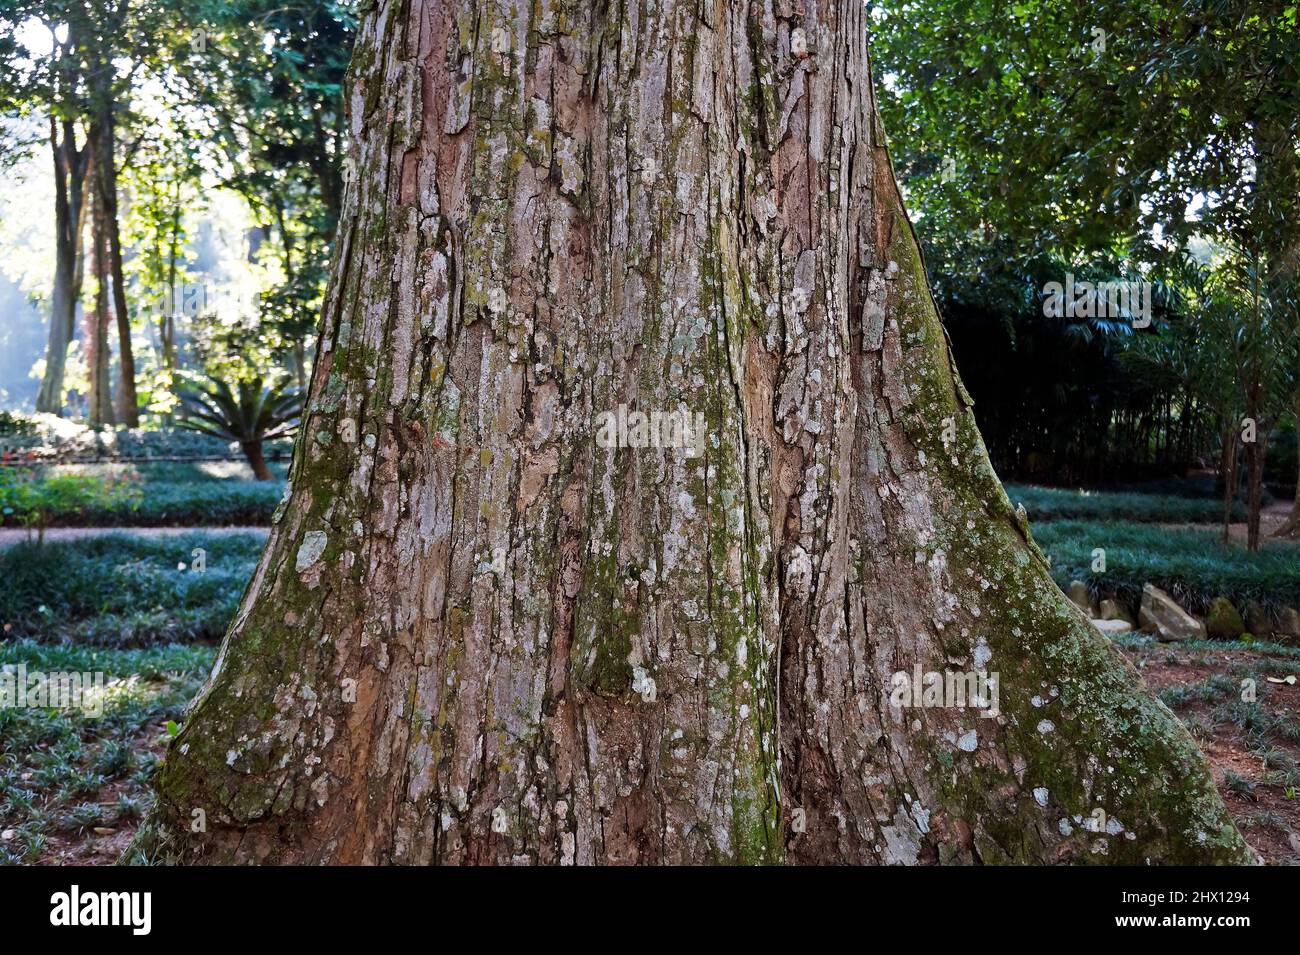 Crabwood tree or Andiroba tree (Carapa guianensis), Rio, Brazil Stock Photo